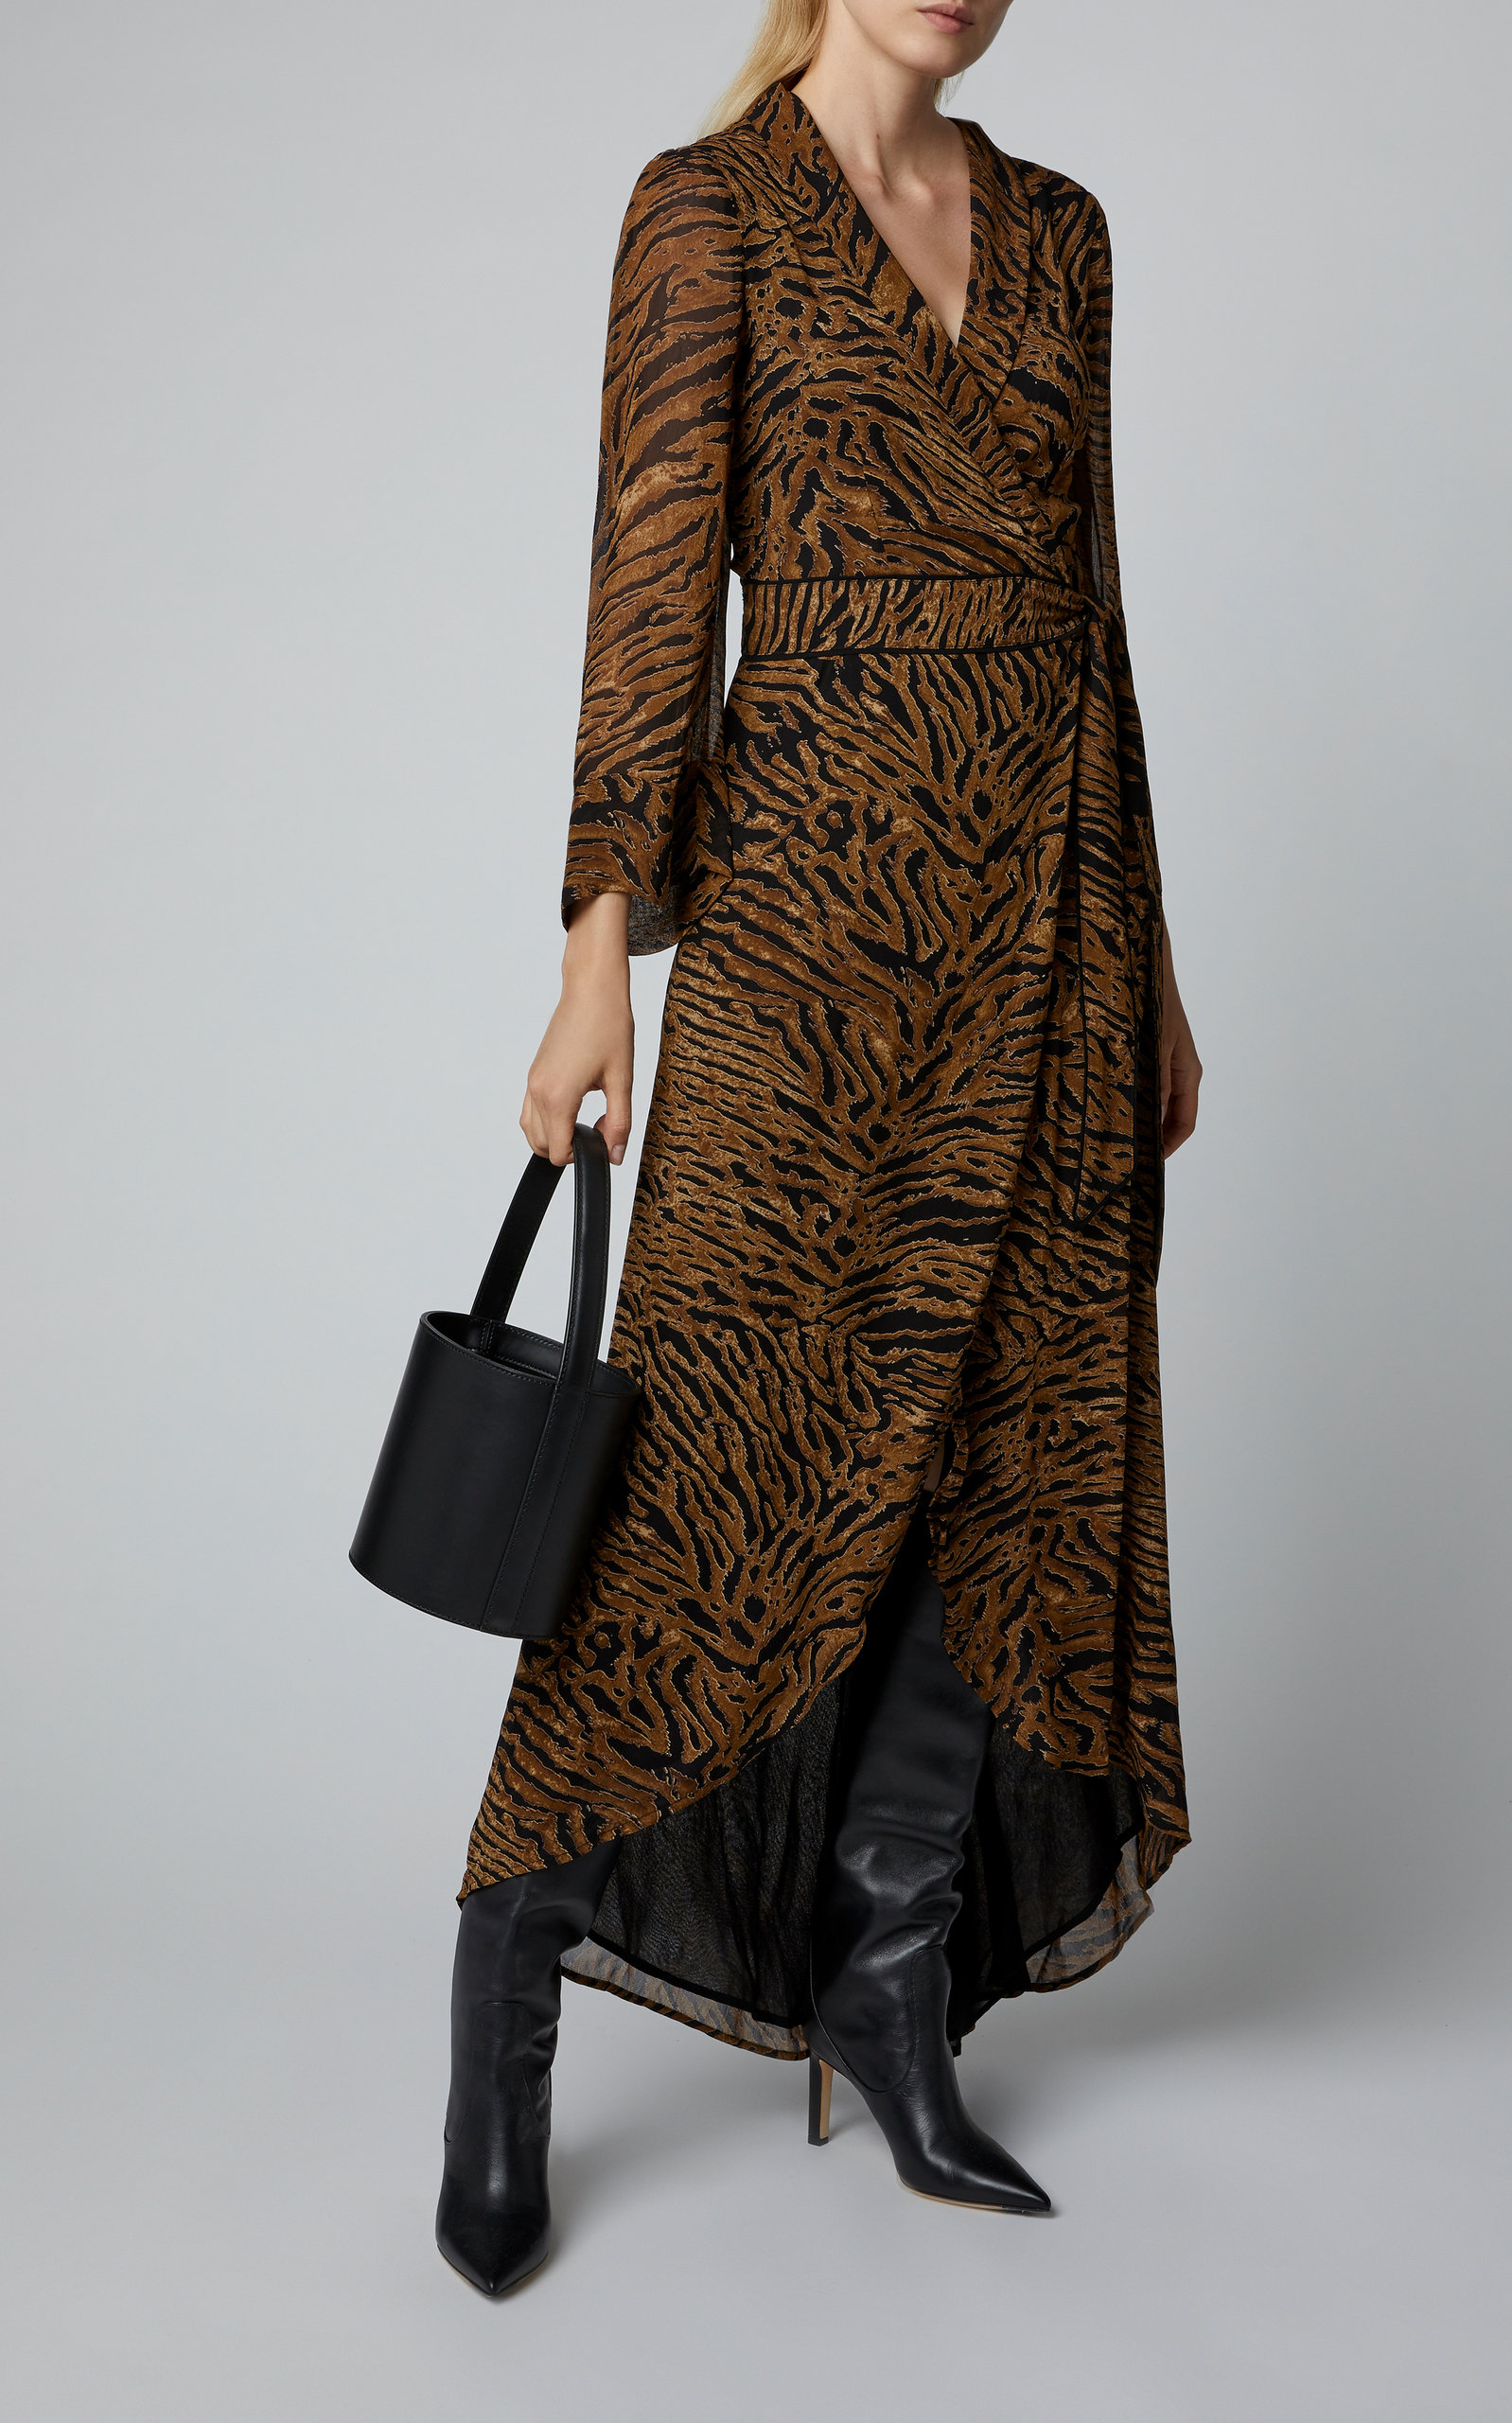 Tiger Print Wrap Dress Flash Sales, UP ...